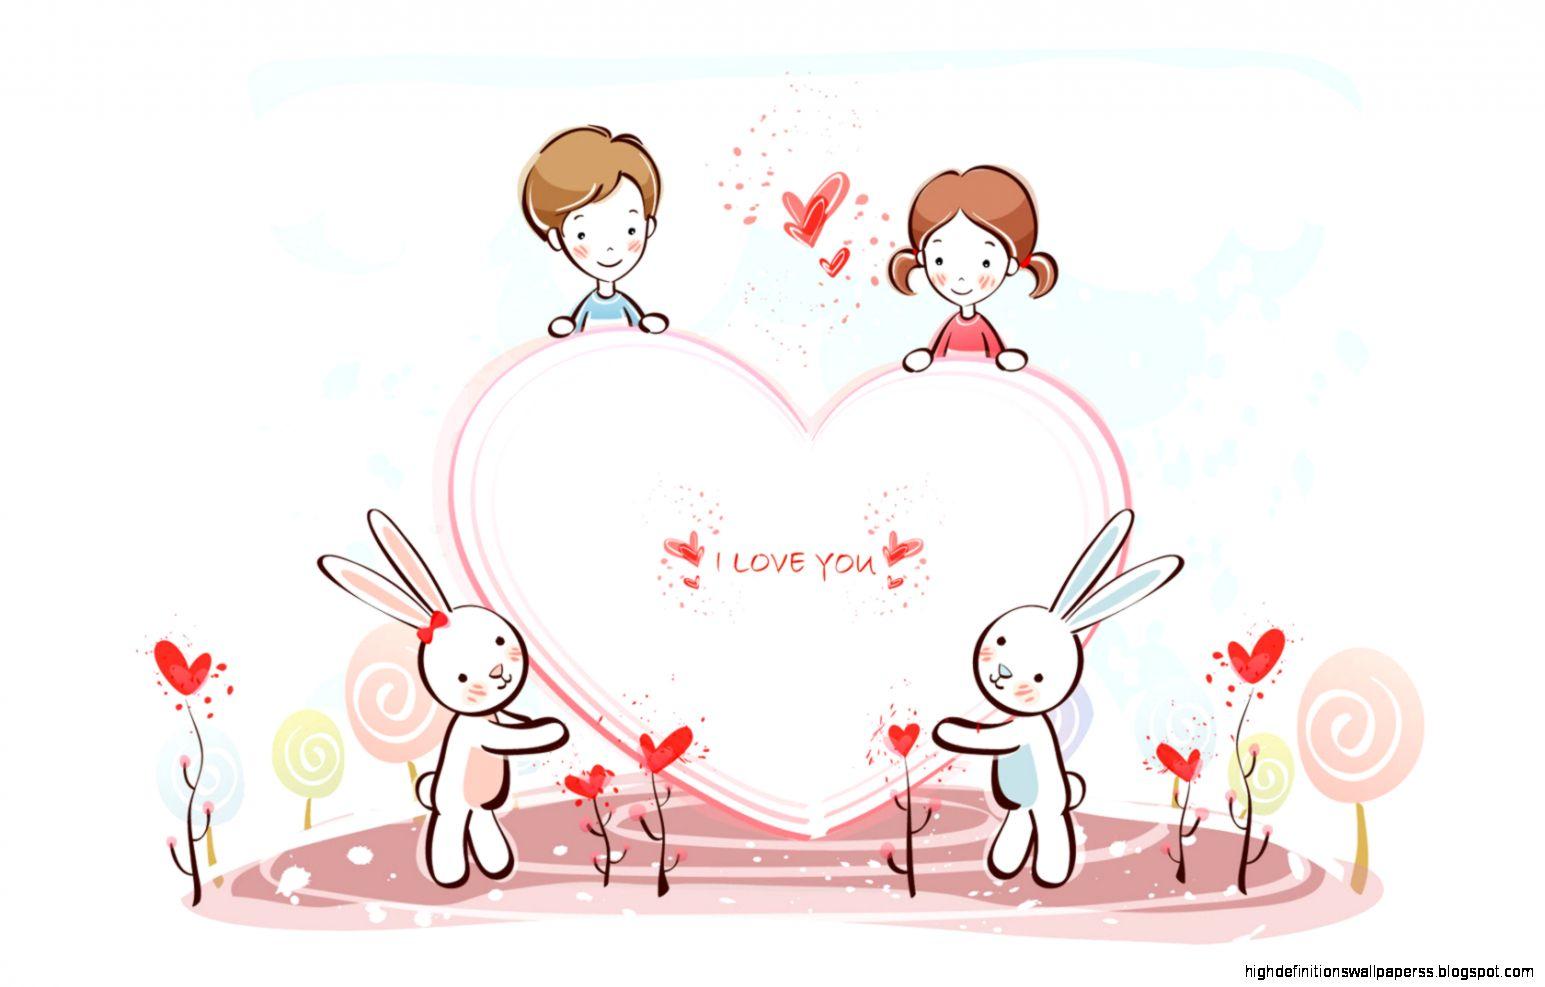 Valentines Day Wallpaper Cute Cartoon. High Definitions Wallpaper